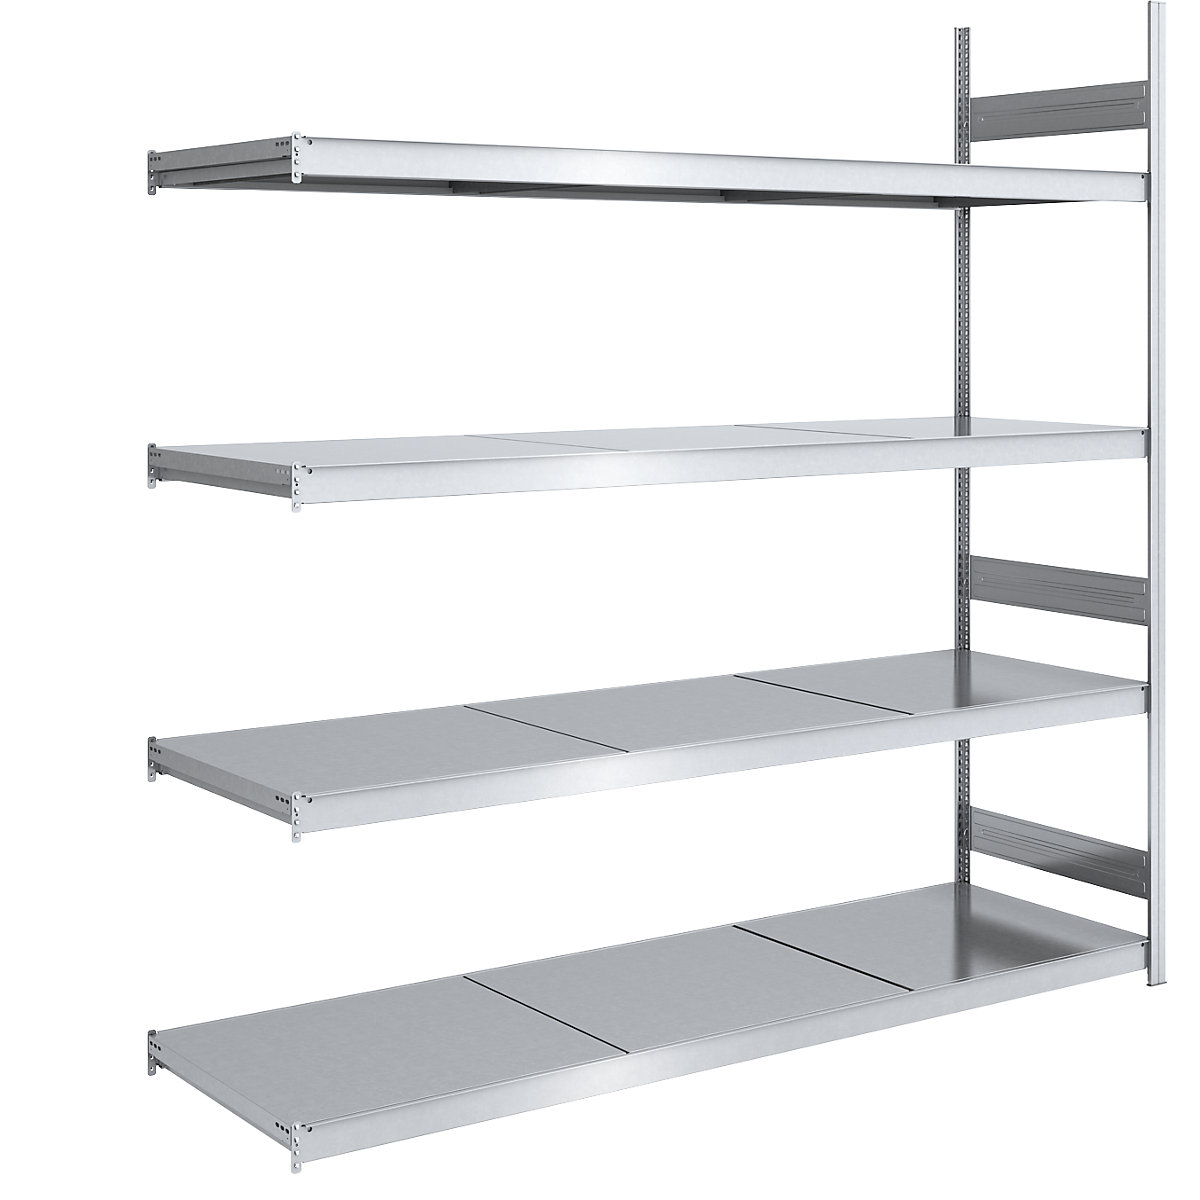 Wide span boltless shelving unit, zinc plated – hofe, shelf WxD 2250 x 800 mm, extension shelf unit, 4 steel shelves, height 2500 mm